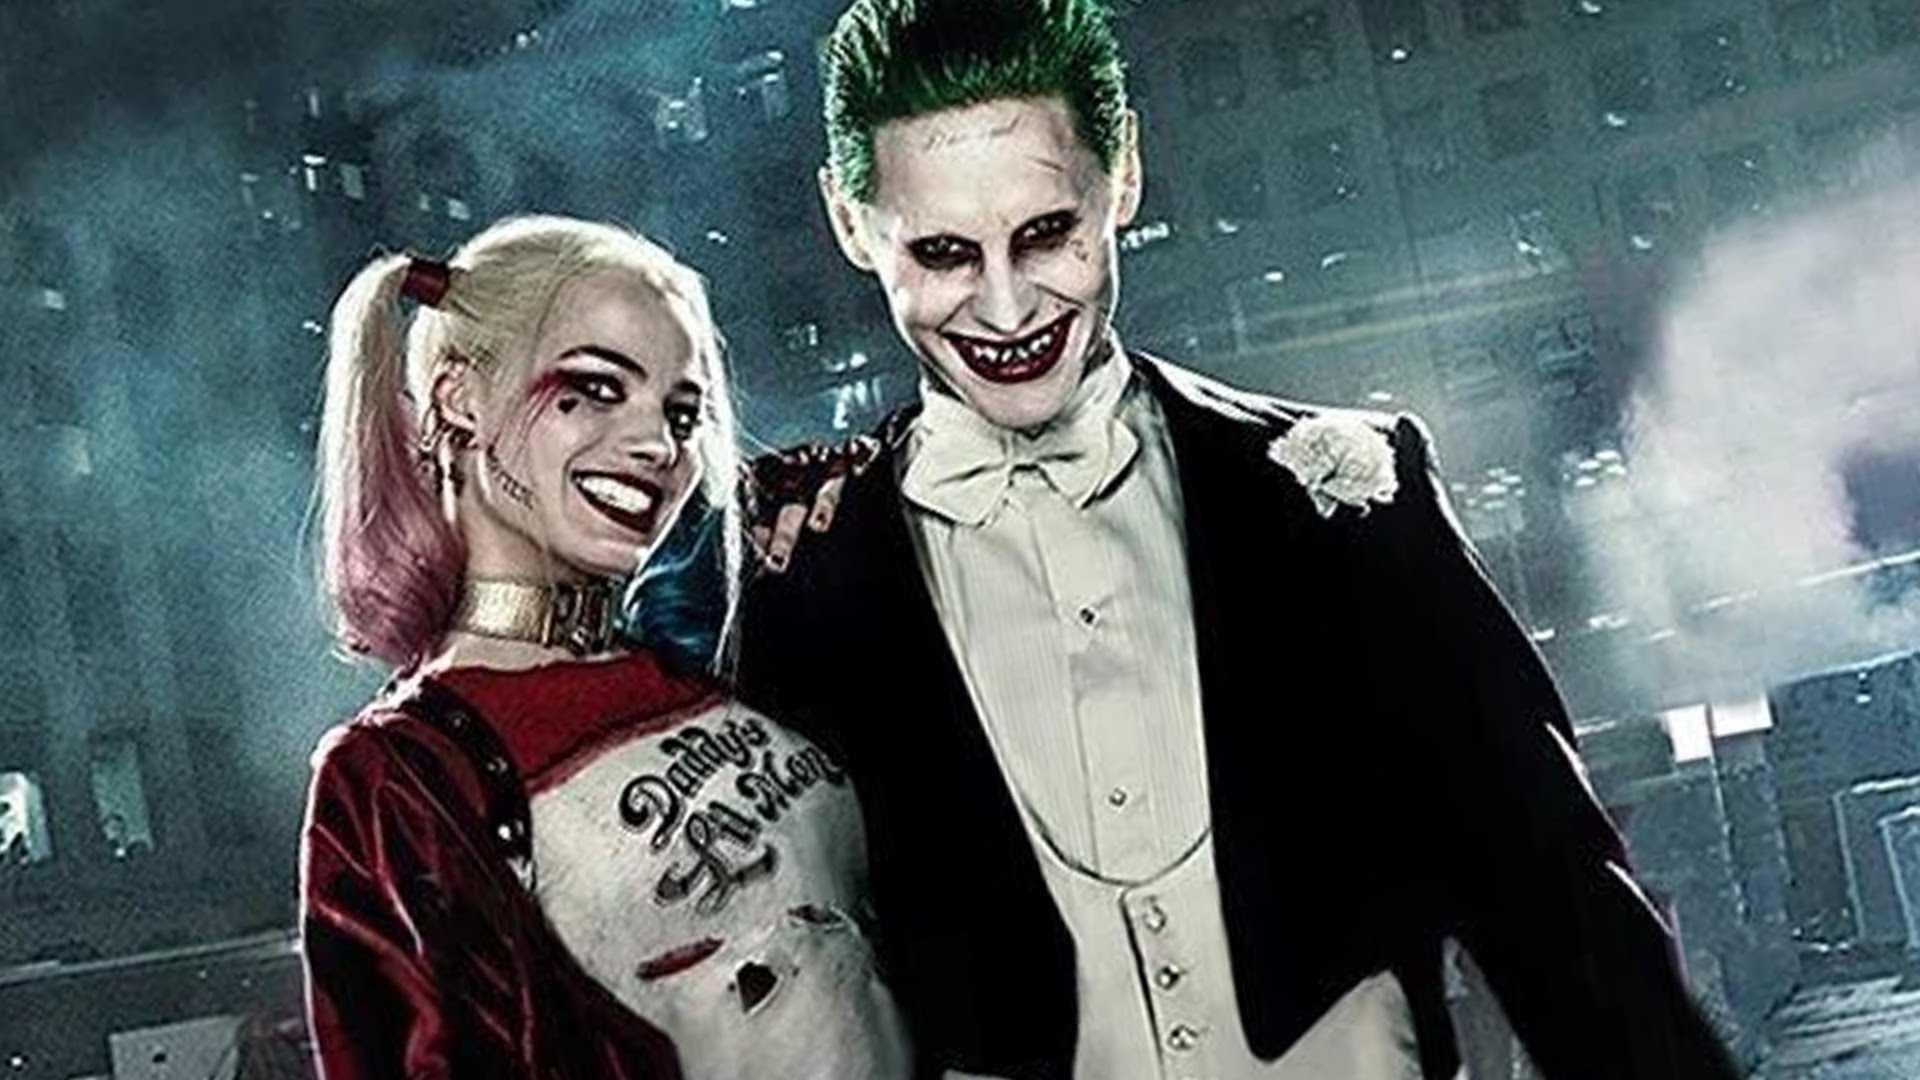 Joker Suicide Squad Wallpaper background picture